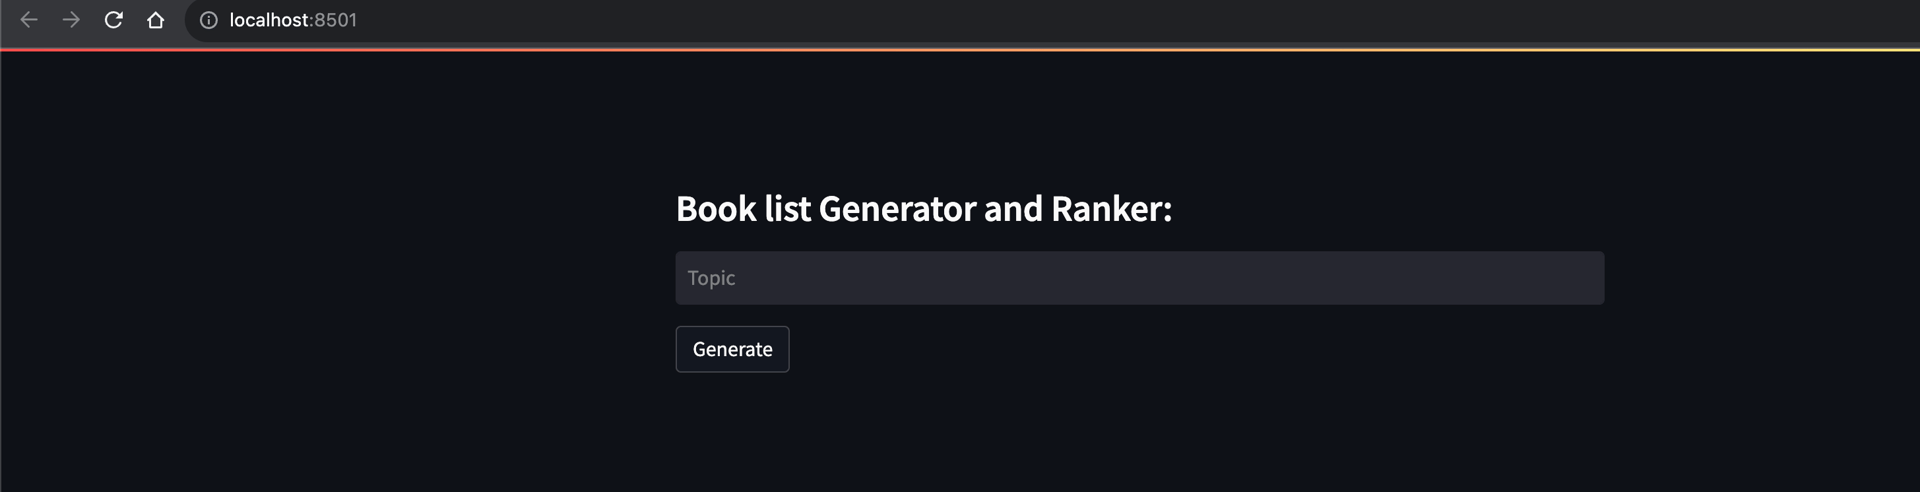 Book list generator